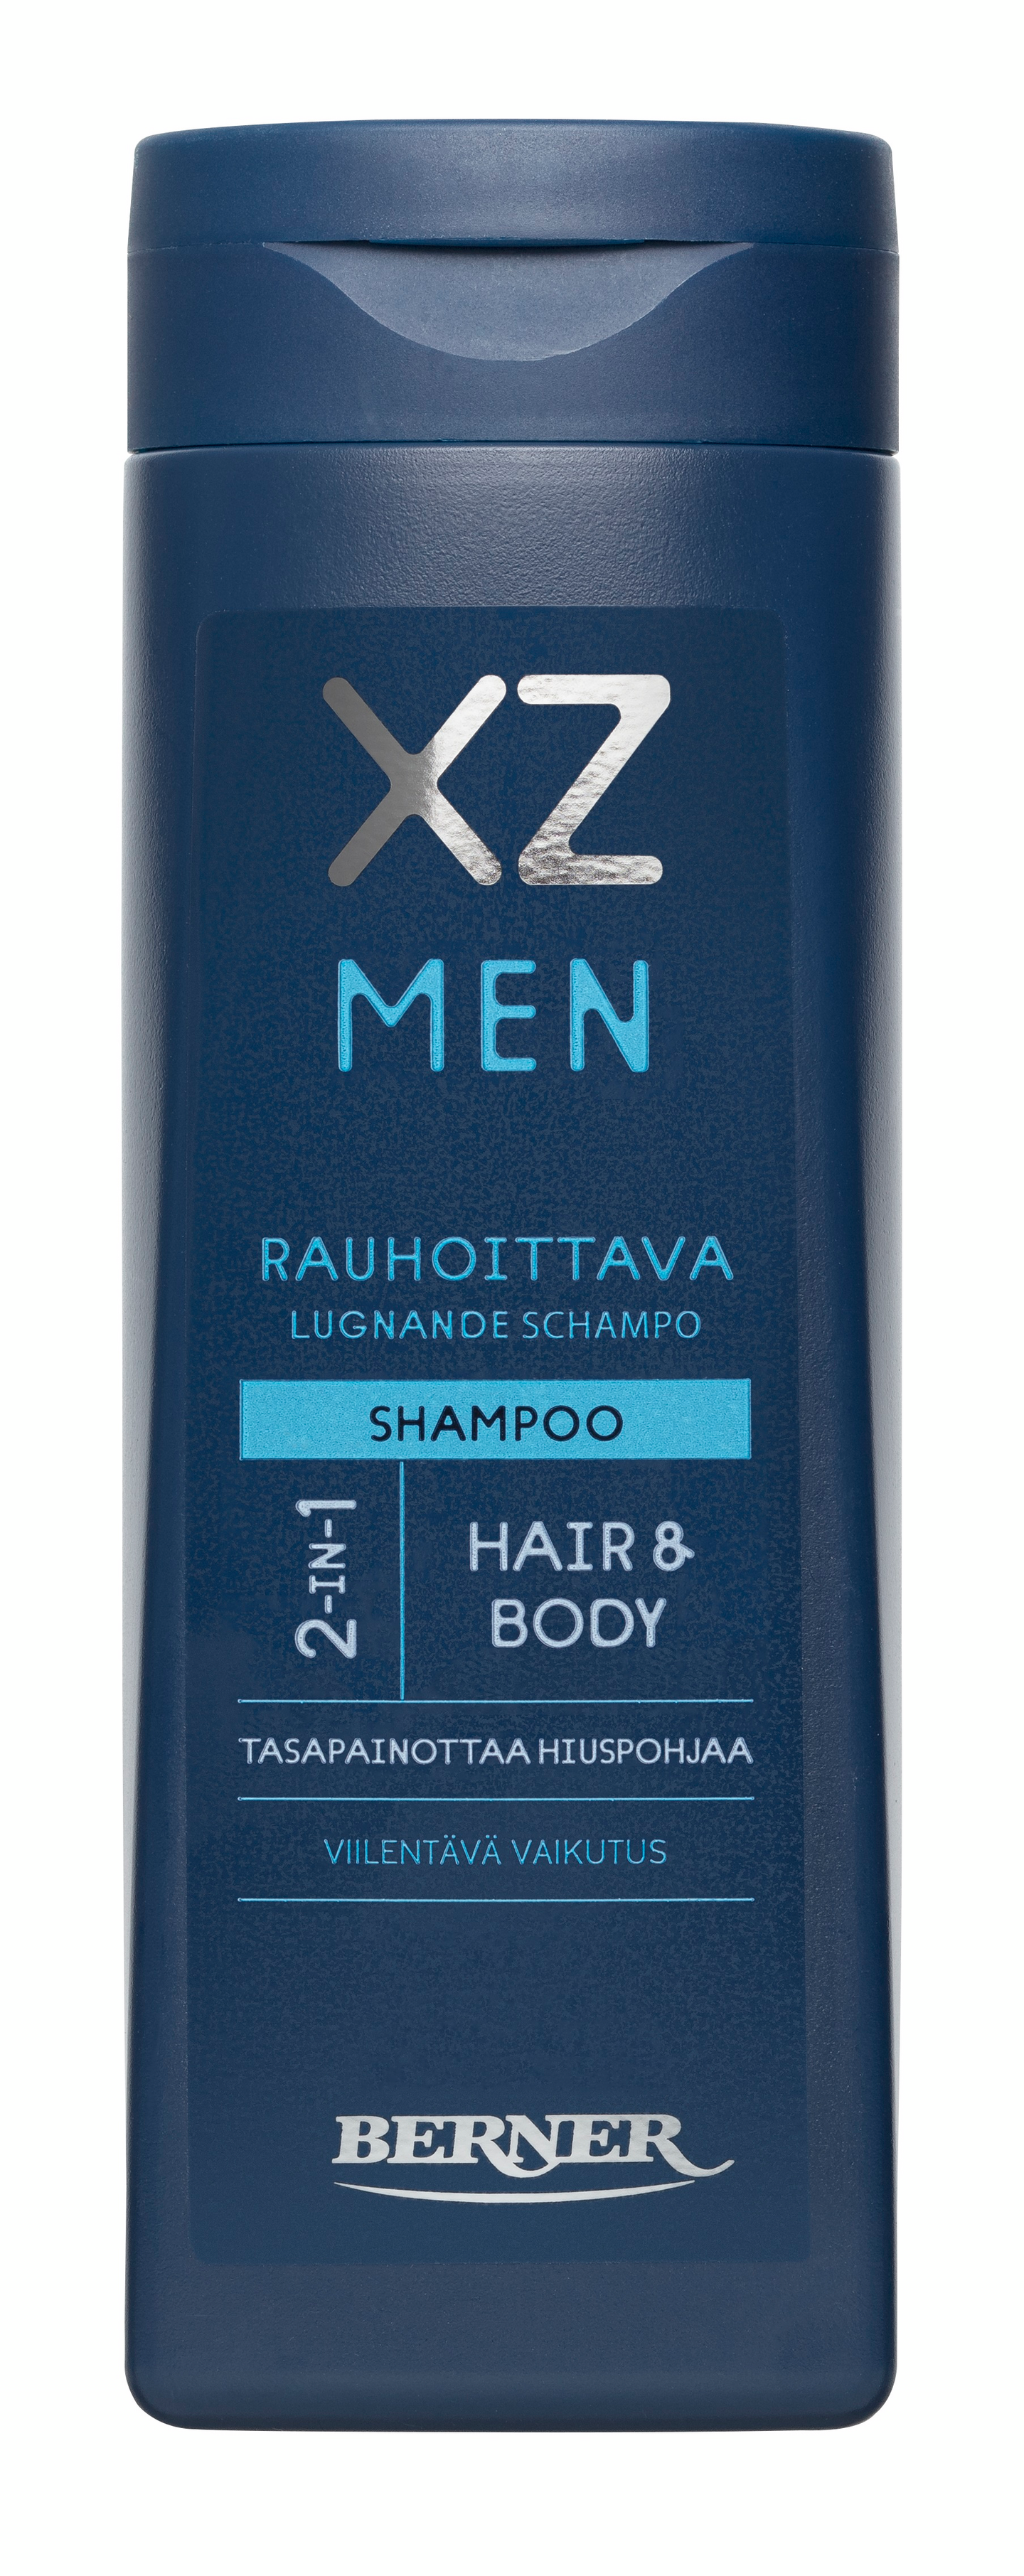 XZ Men shampoo 250ml 2in1 rauhoittava